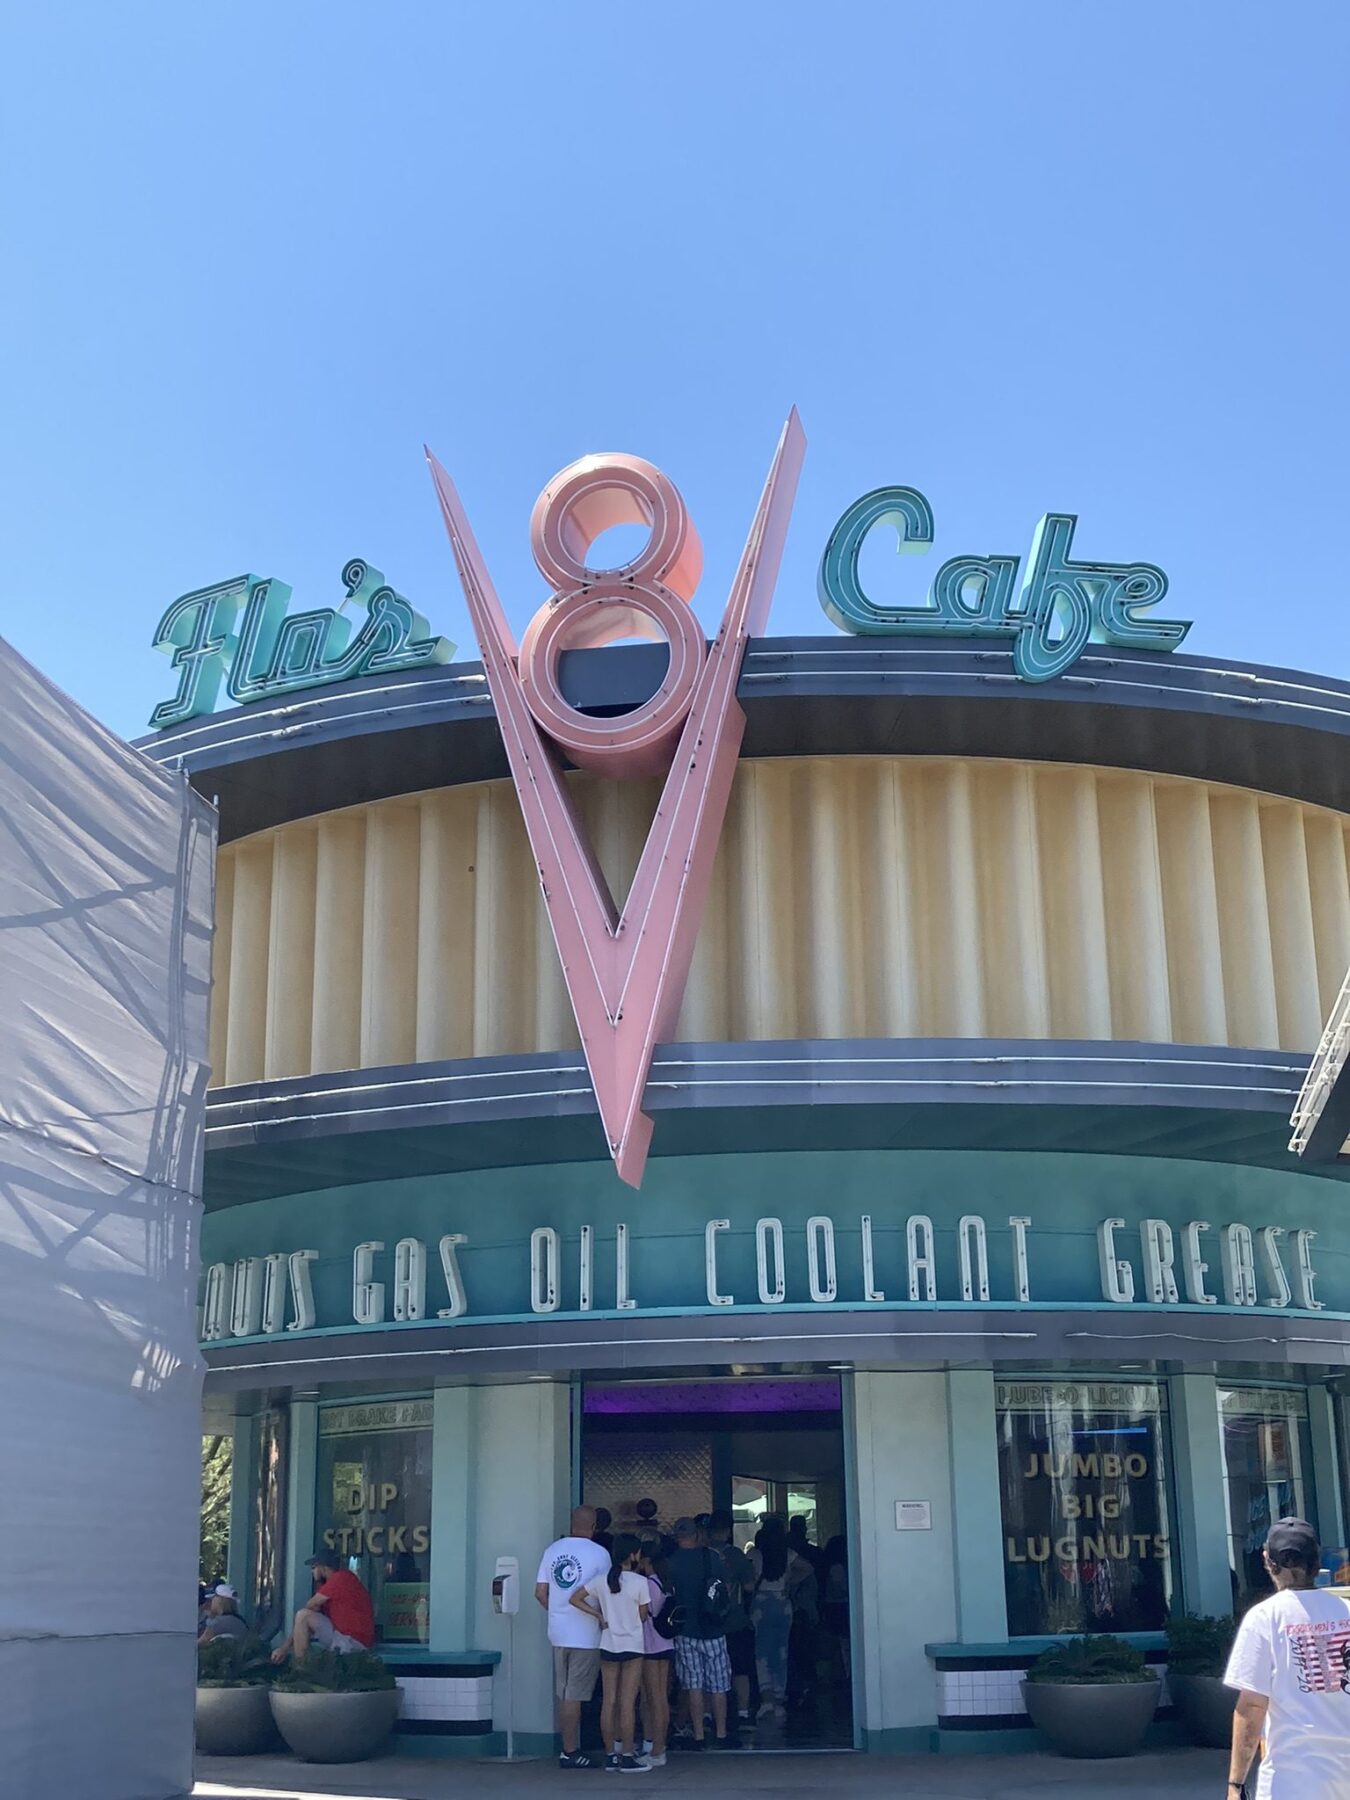 Flo's 8 Cafe - California Advernture Food